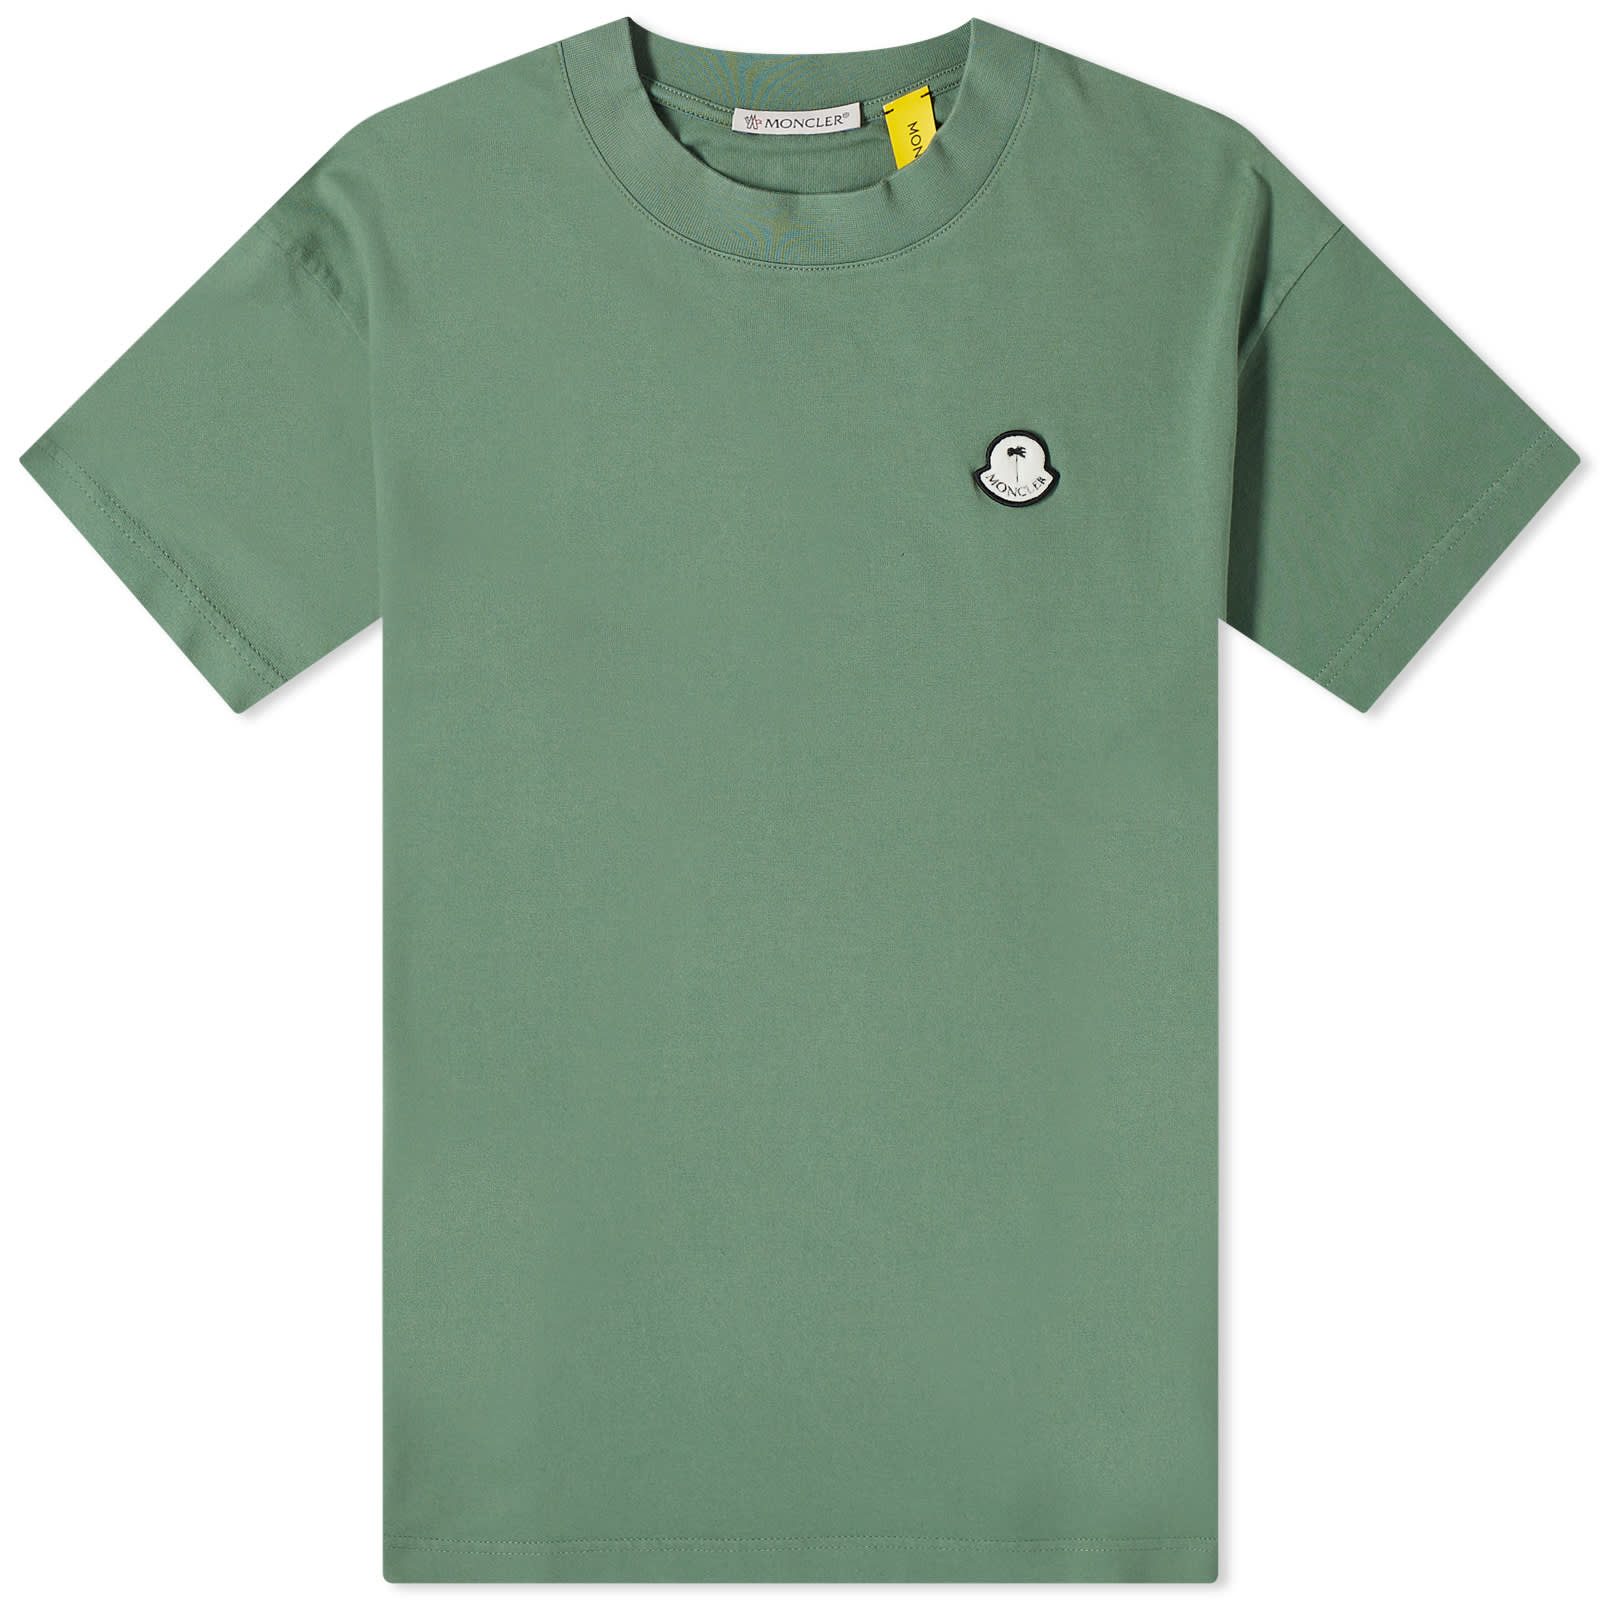 Футболка Moncler Genius X Palm Angels, зеленый рубашка поло с логотипом moncler x palm angels moncler genius темно синий